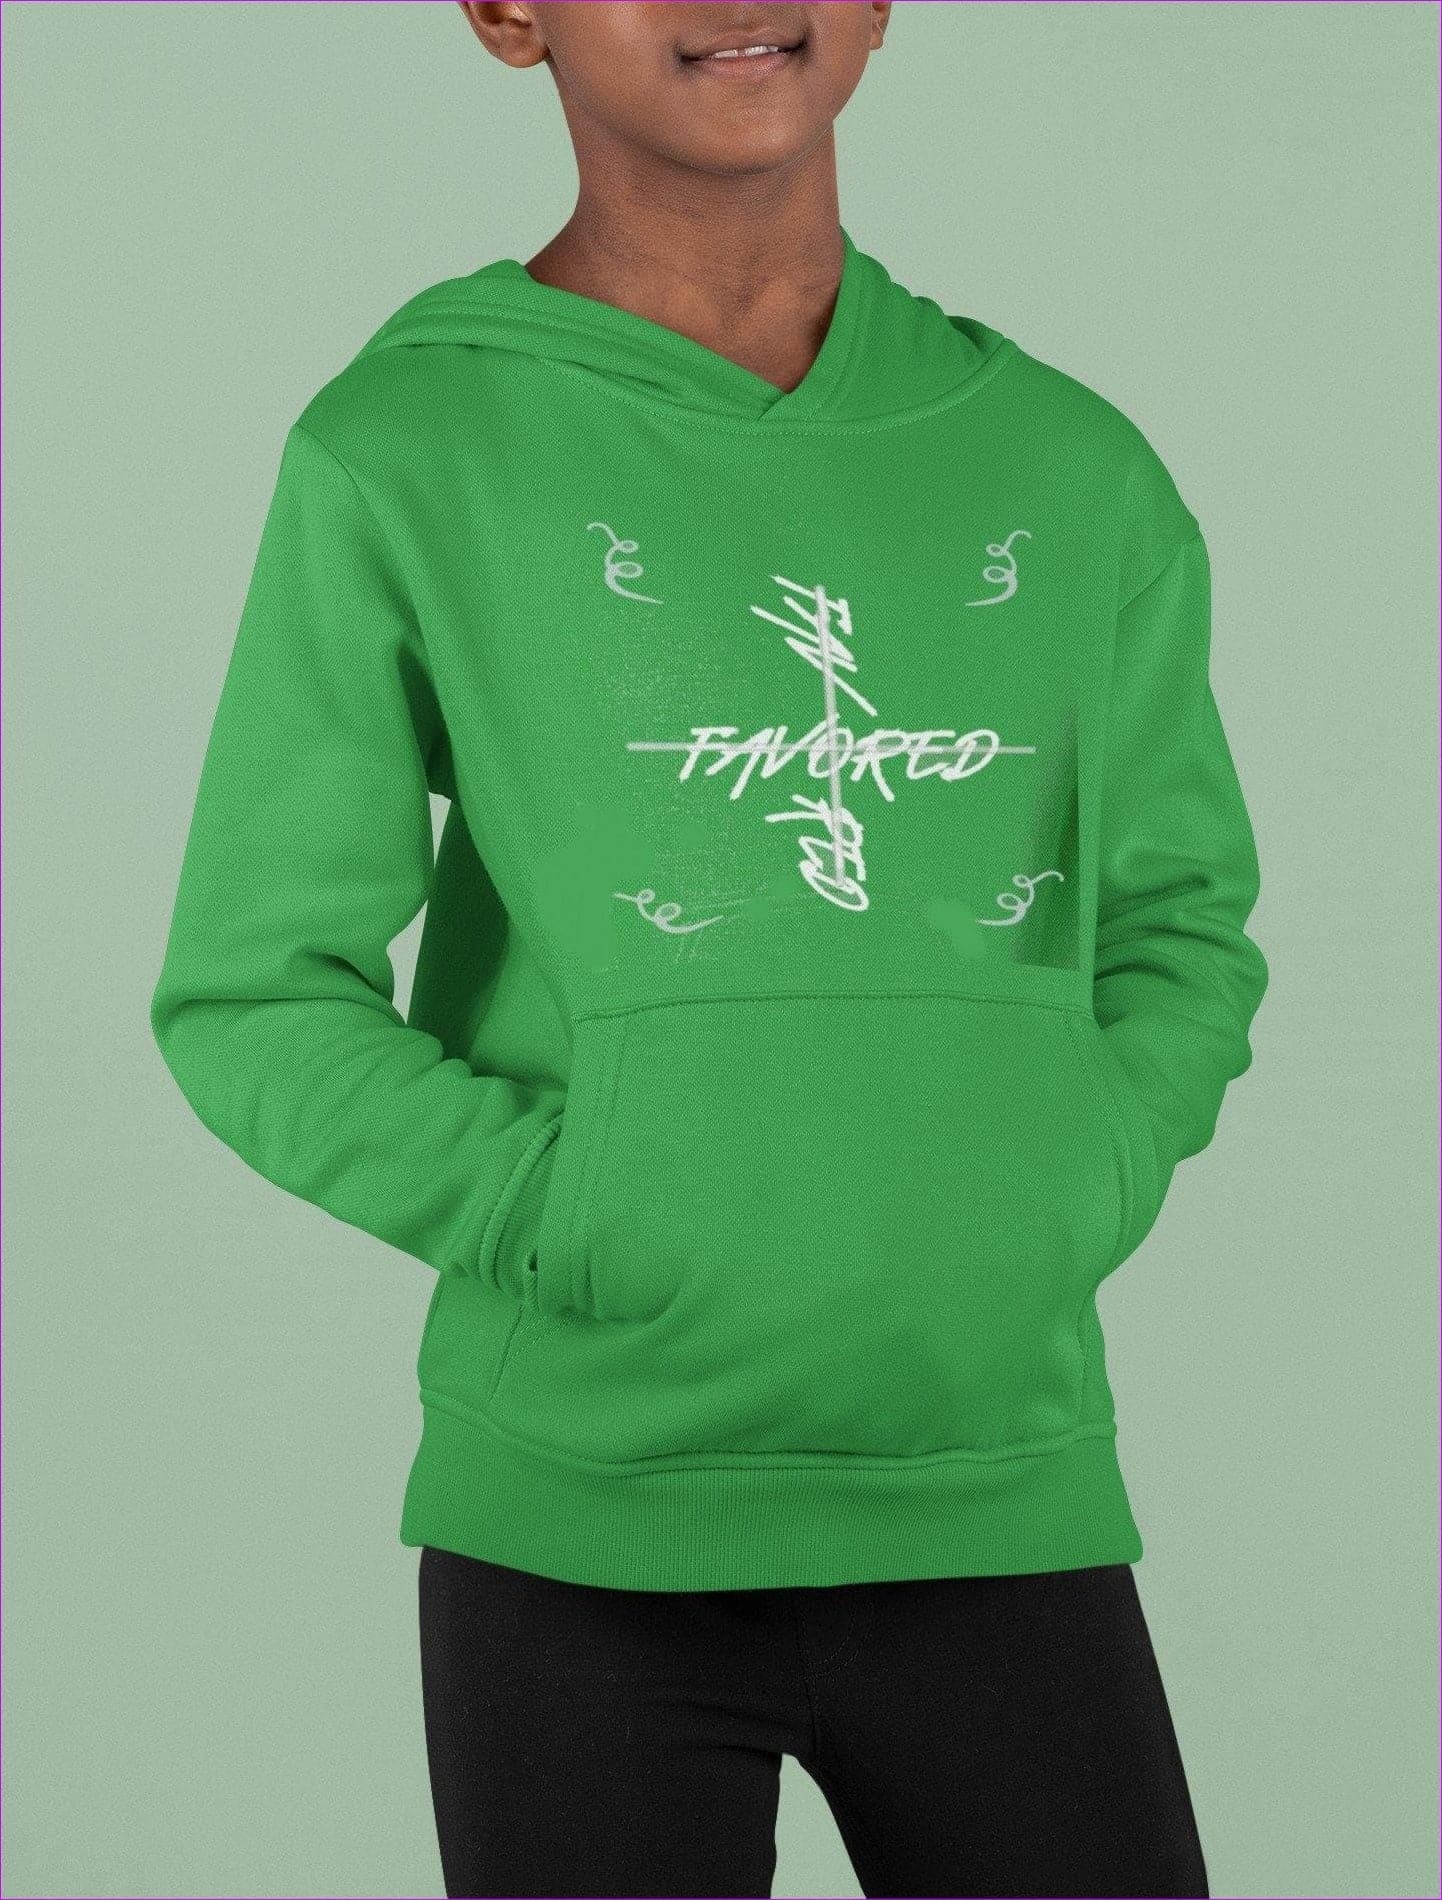 L Irish Green - Favored 2 Heavy Blend Youth Hooded Sweatshirt - kids hoodies at TFC&H Co.